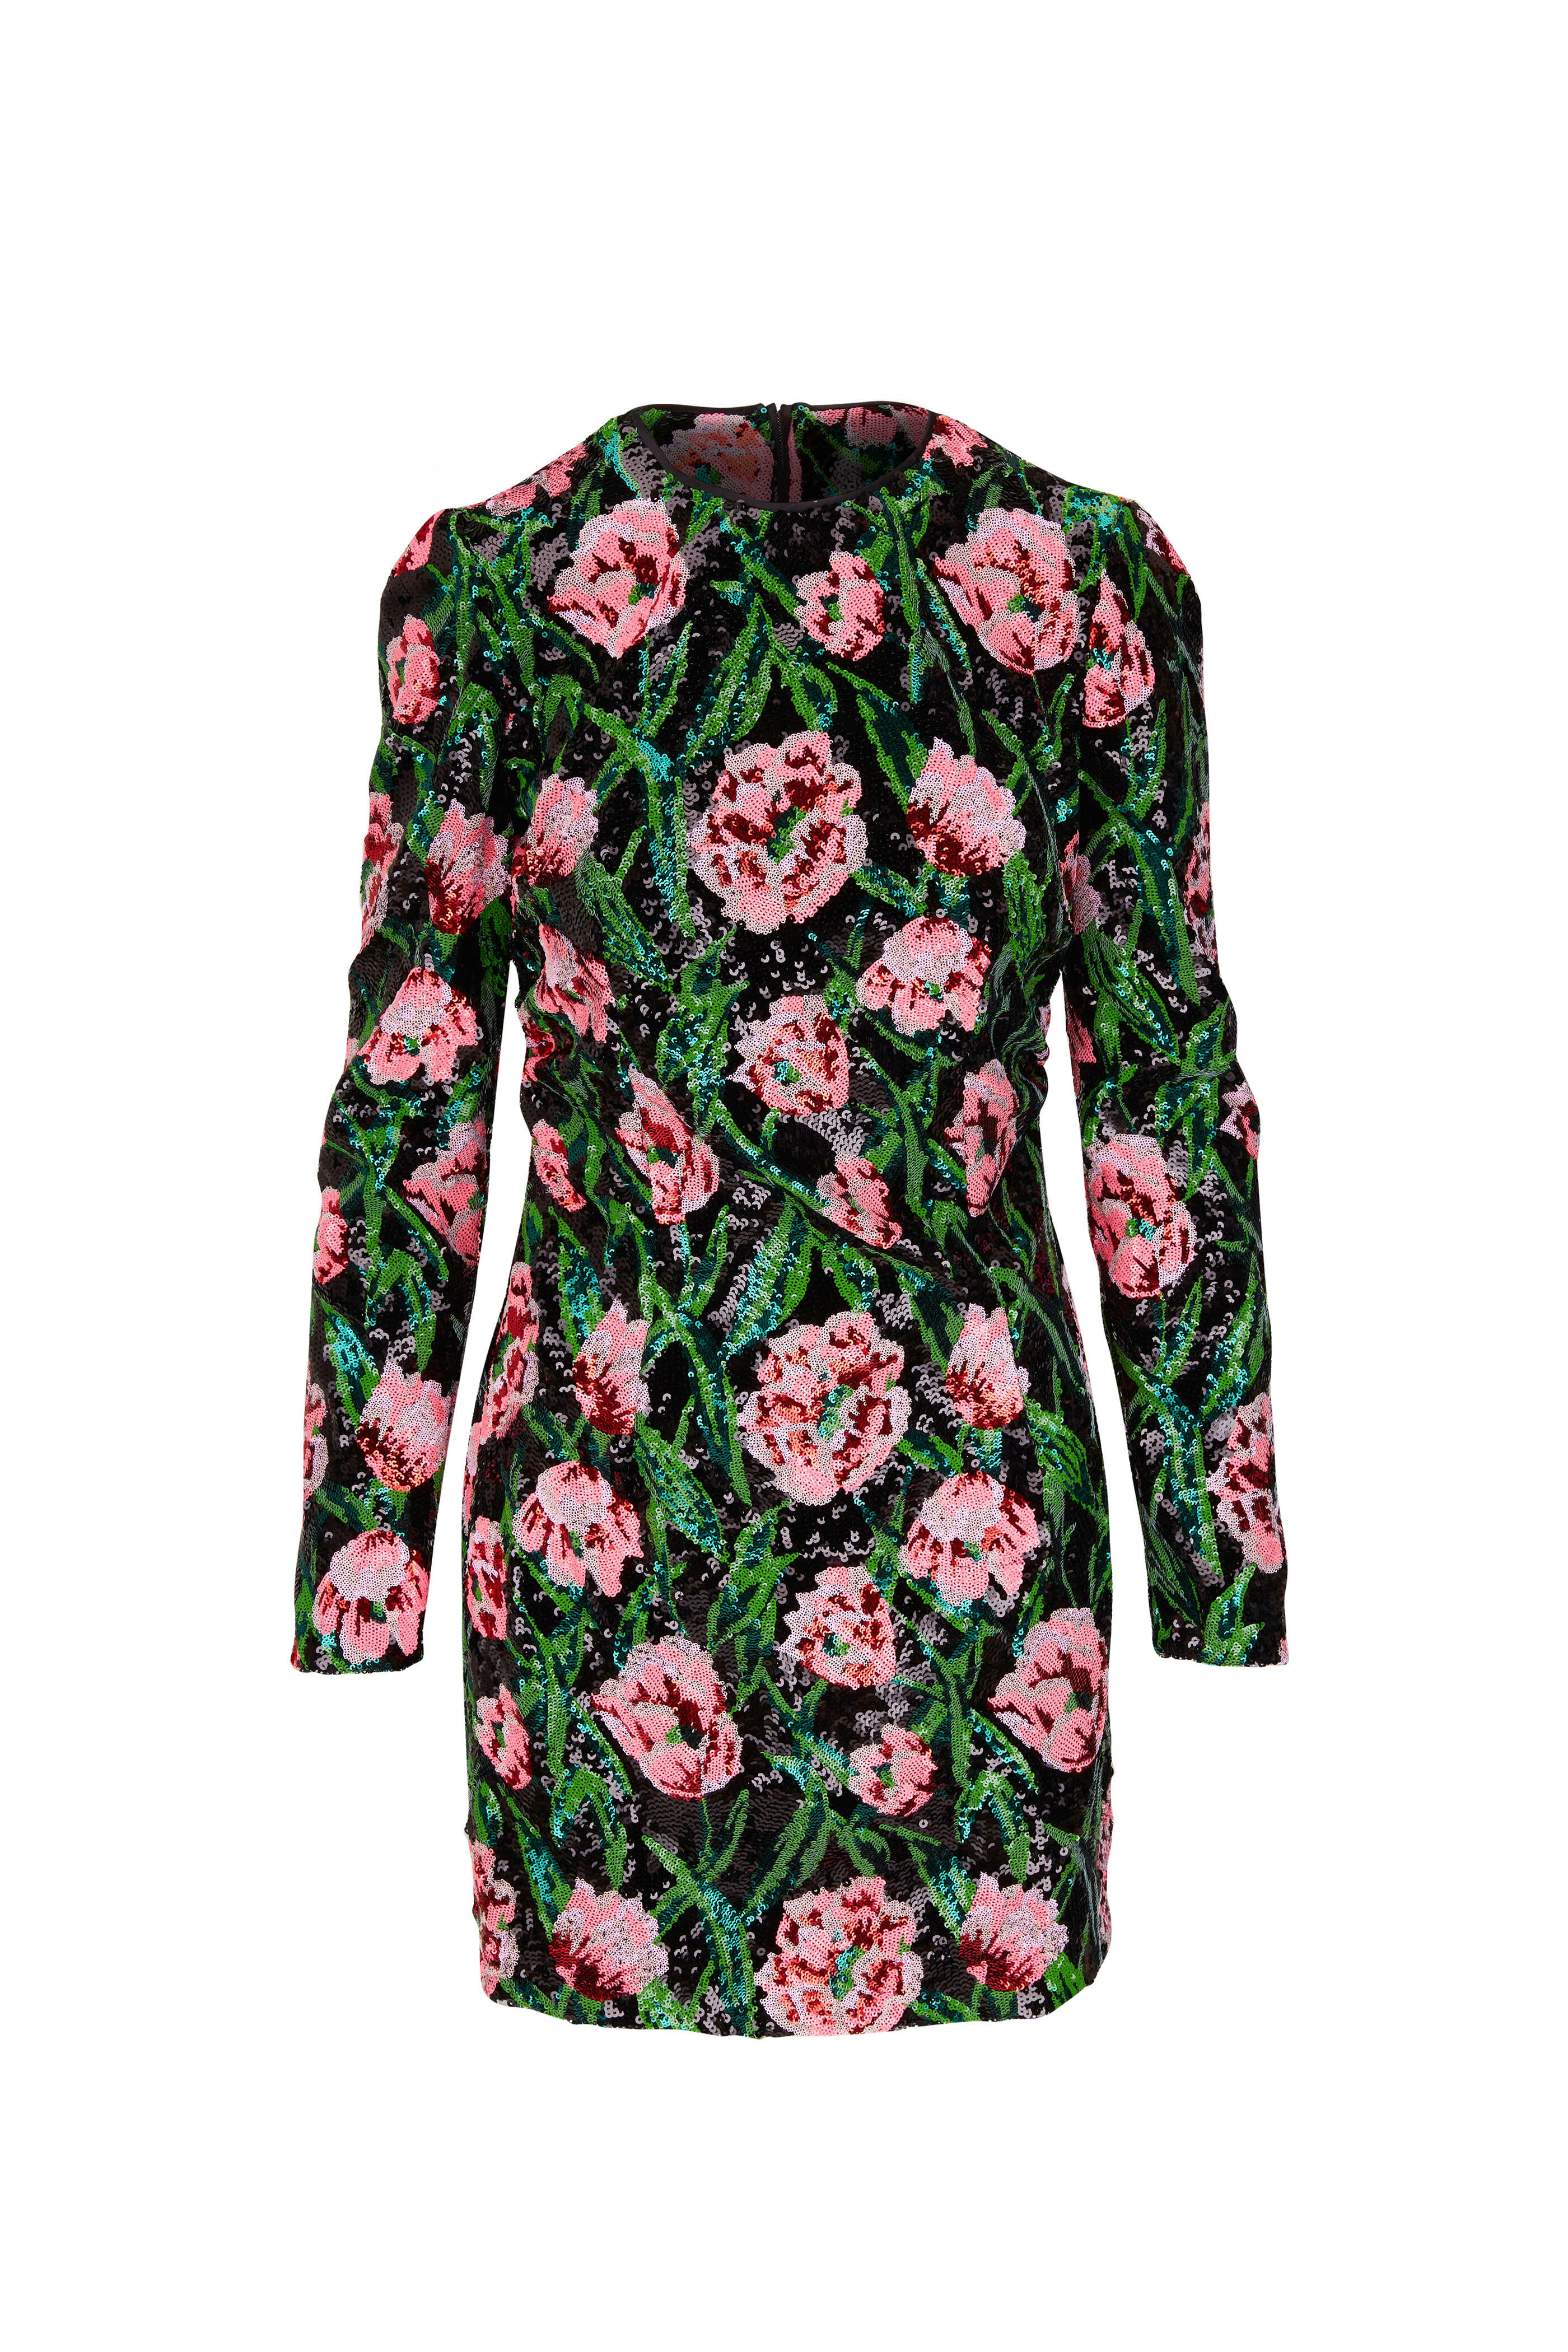 Dolce & Gabbana - Tulip Sequin-Embellished Mini Dress